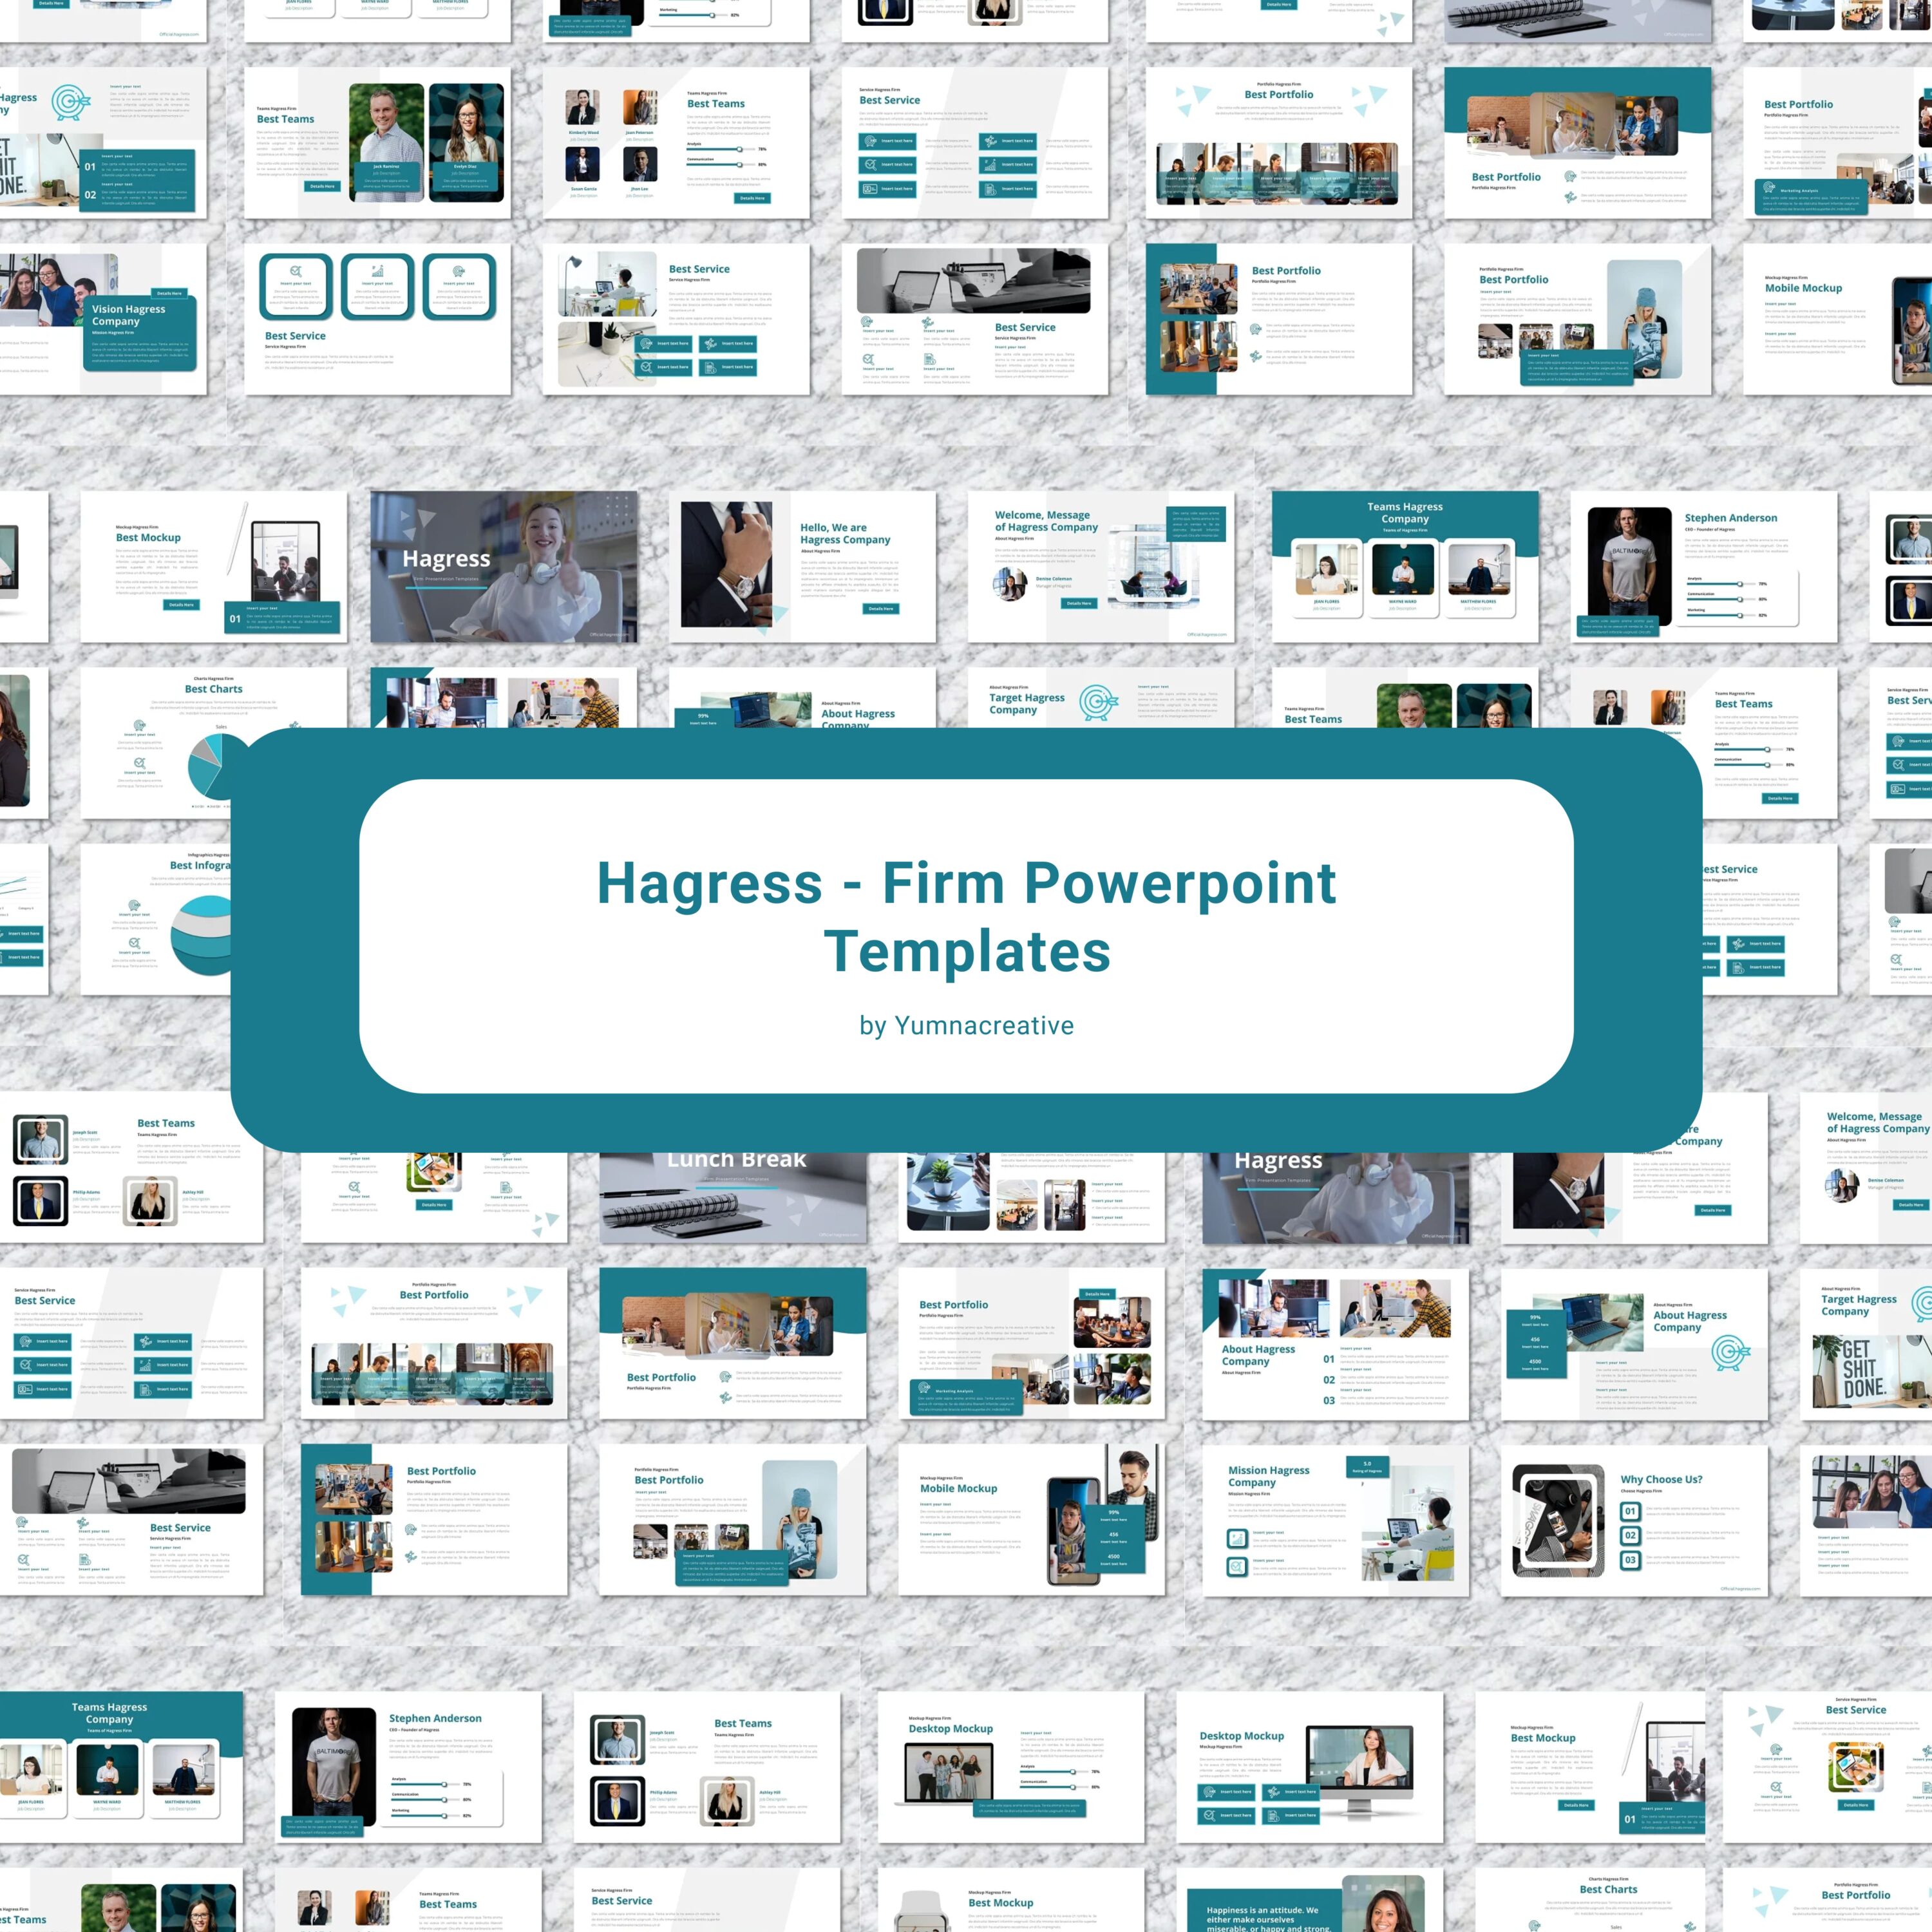 Hagress Firm Powerpoint Templates 02.